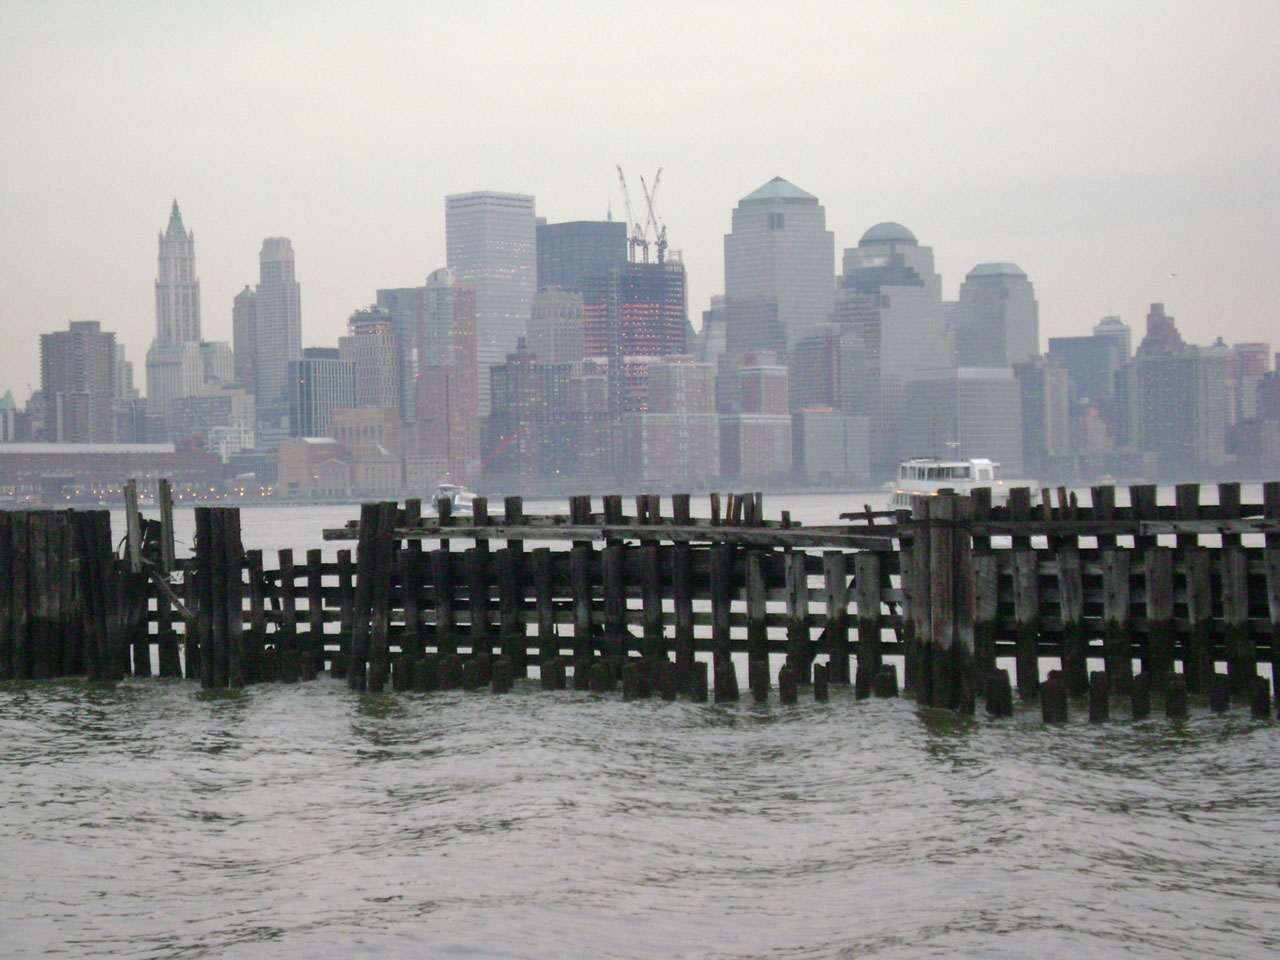 A city skyline (New York) on a gray day